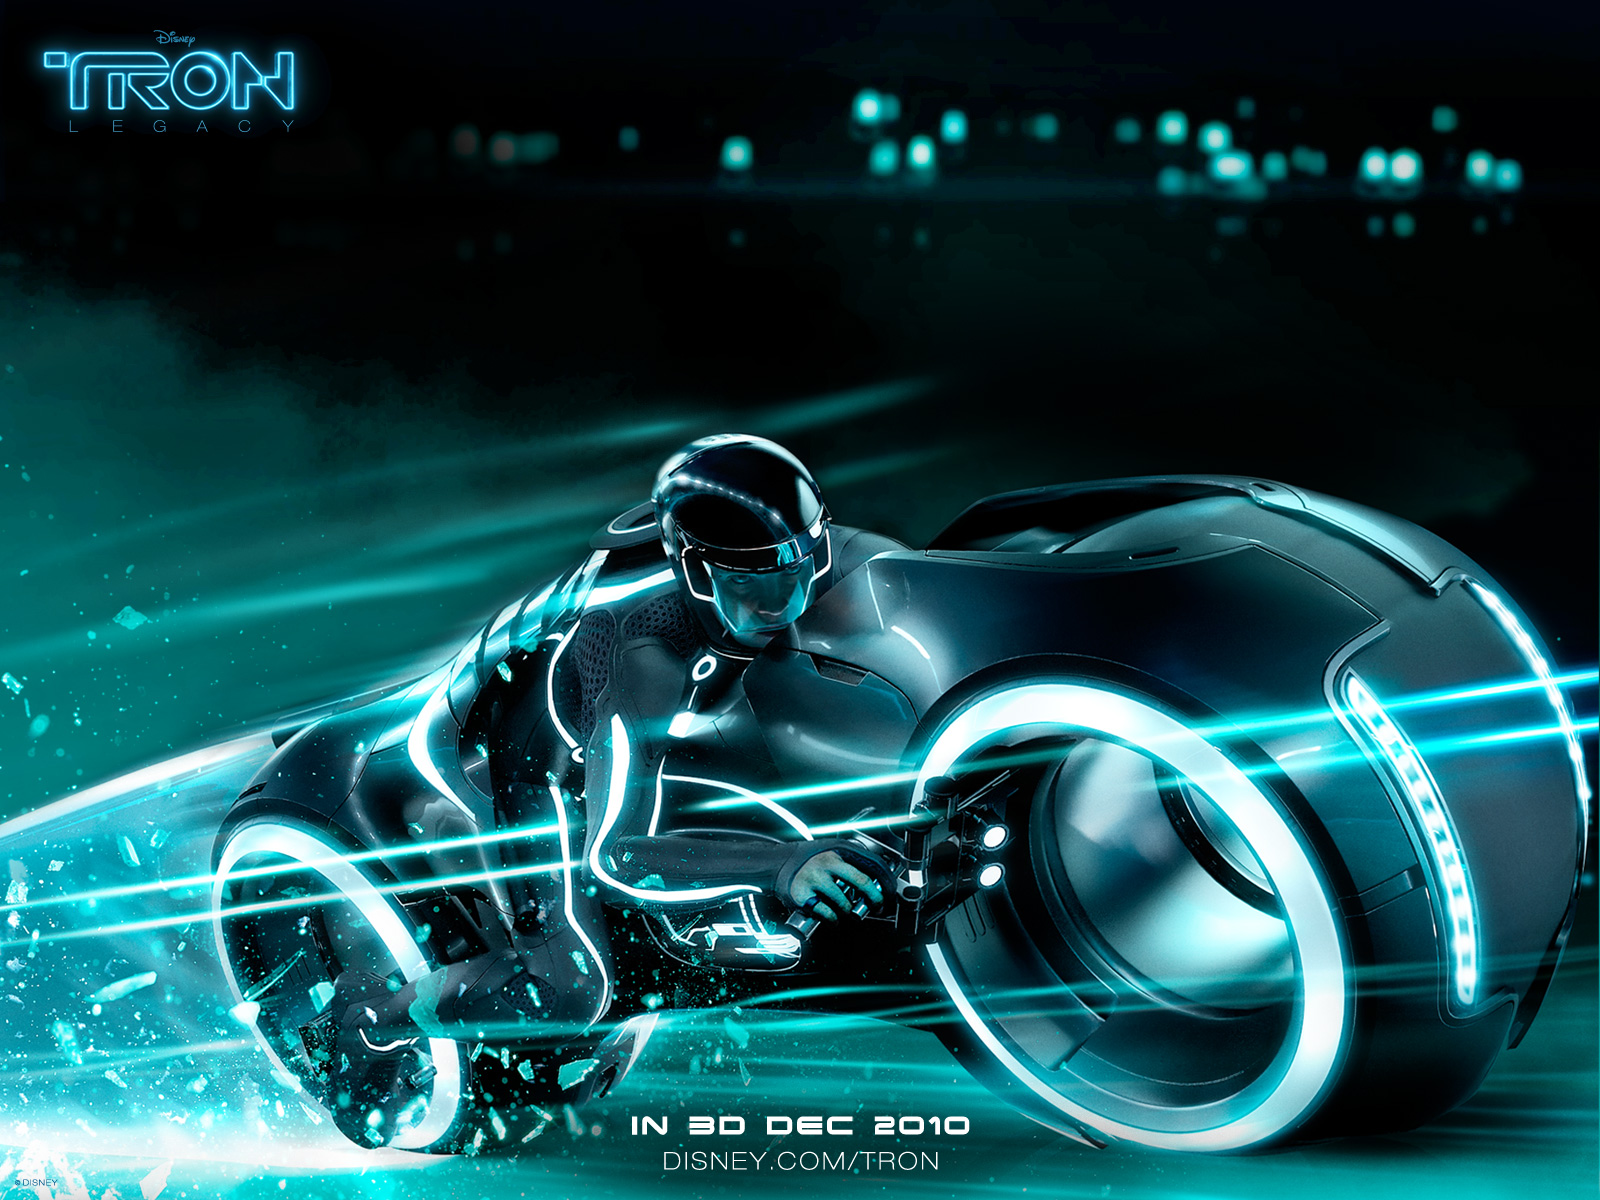 tron legacy wallpaper,automotive design,vehicle,car,animation,future